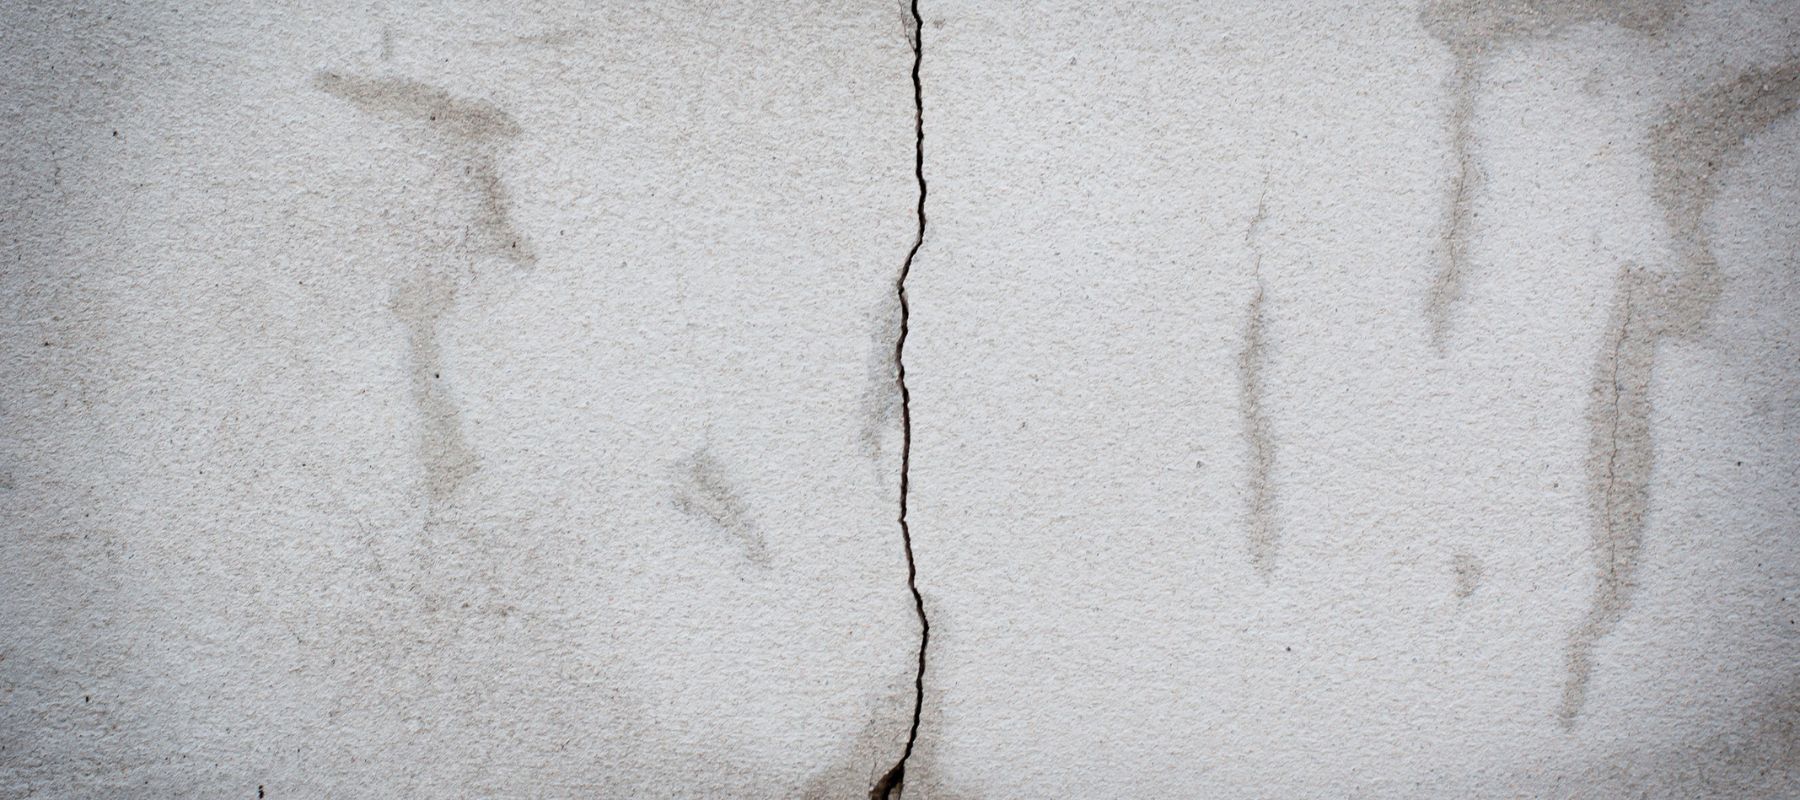 crack in a concrete slab